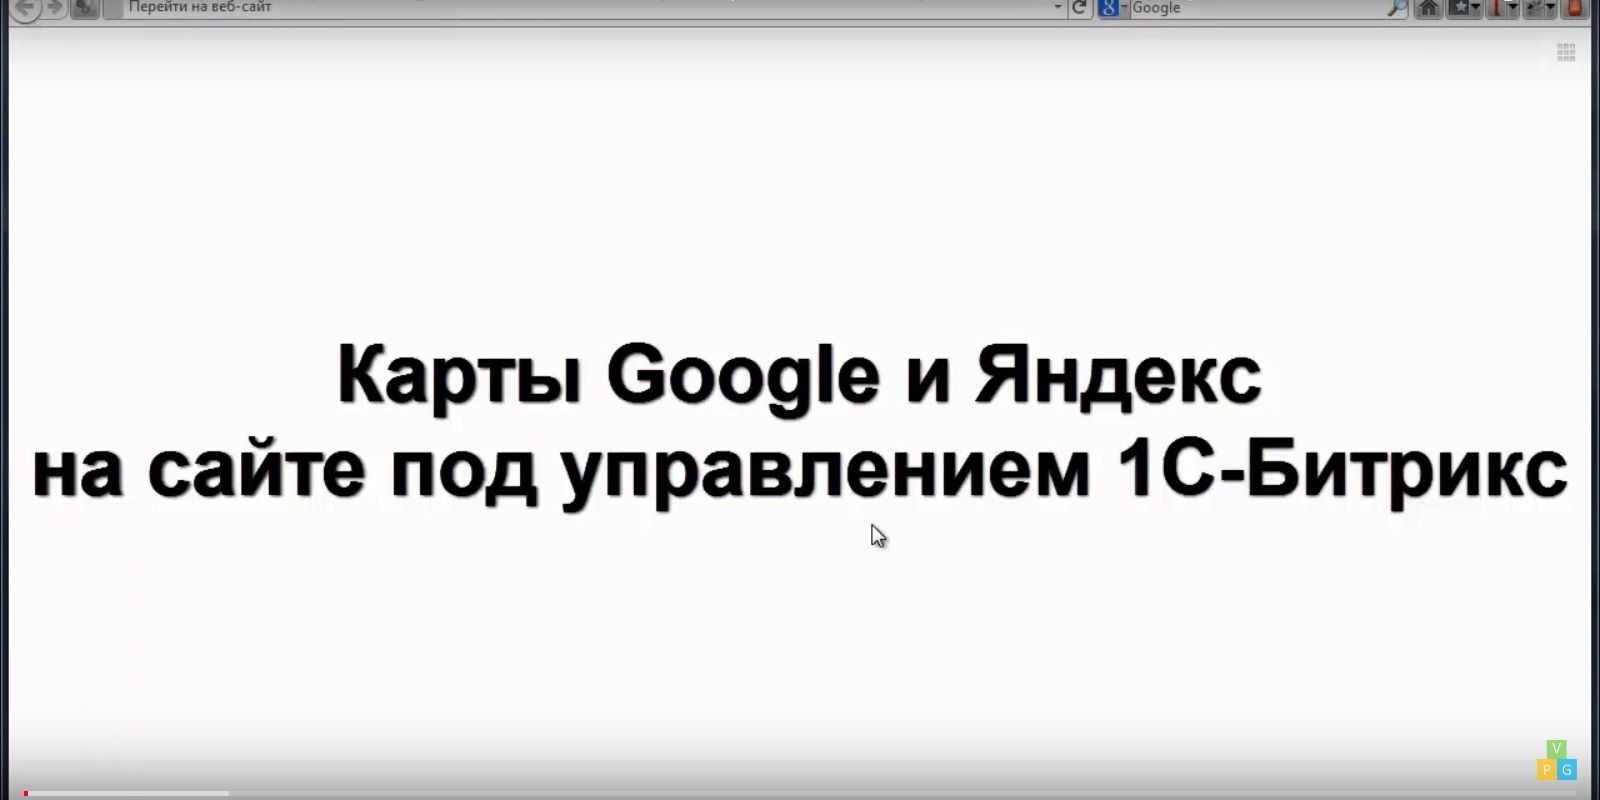  27 -   Google     ( -  )